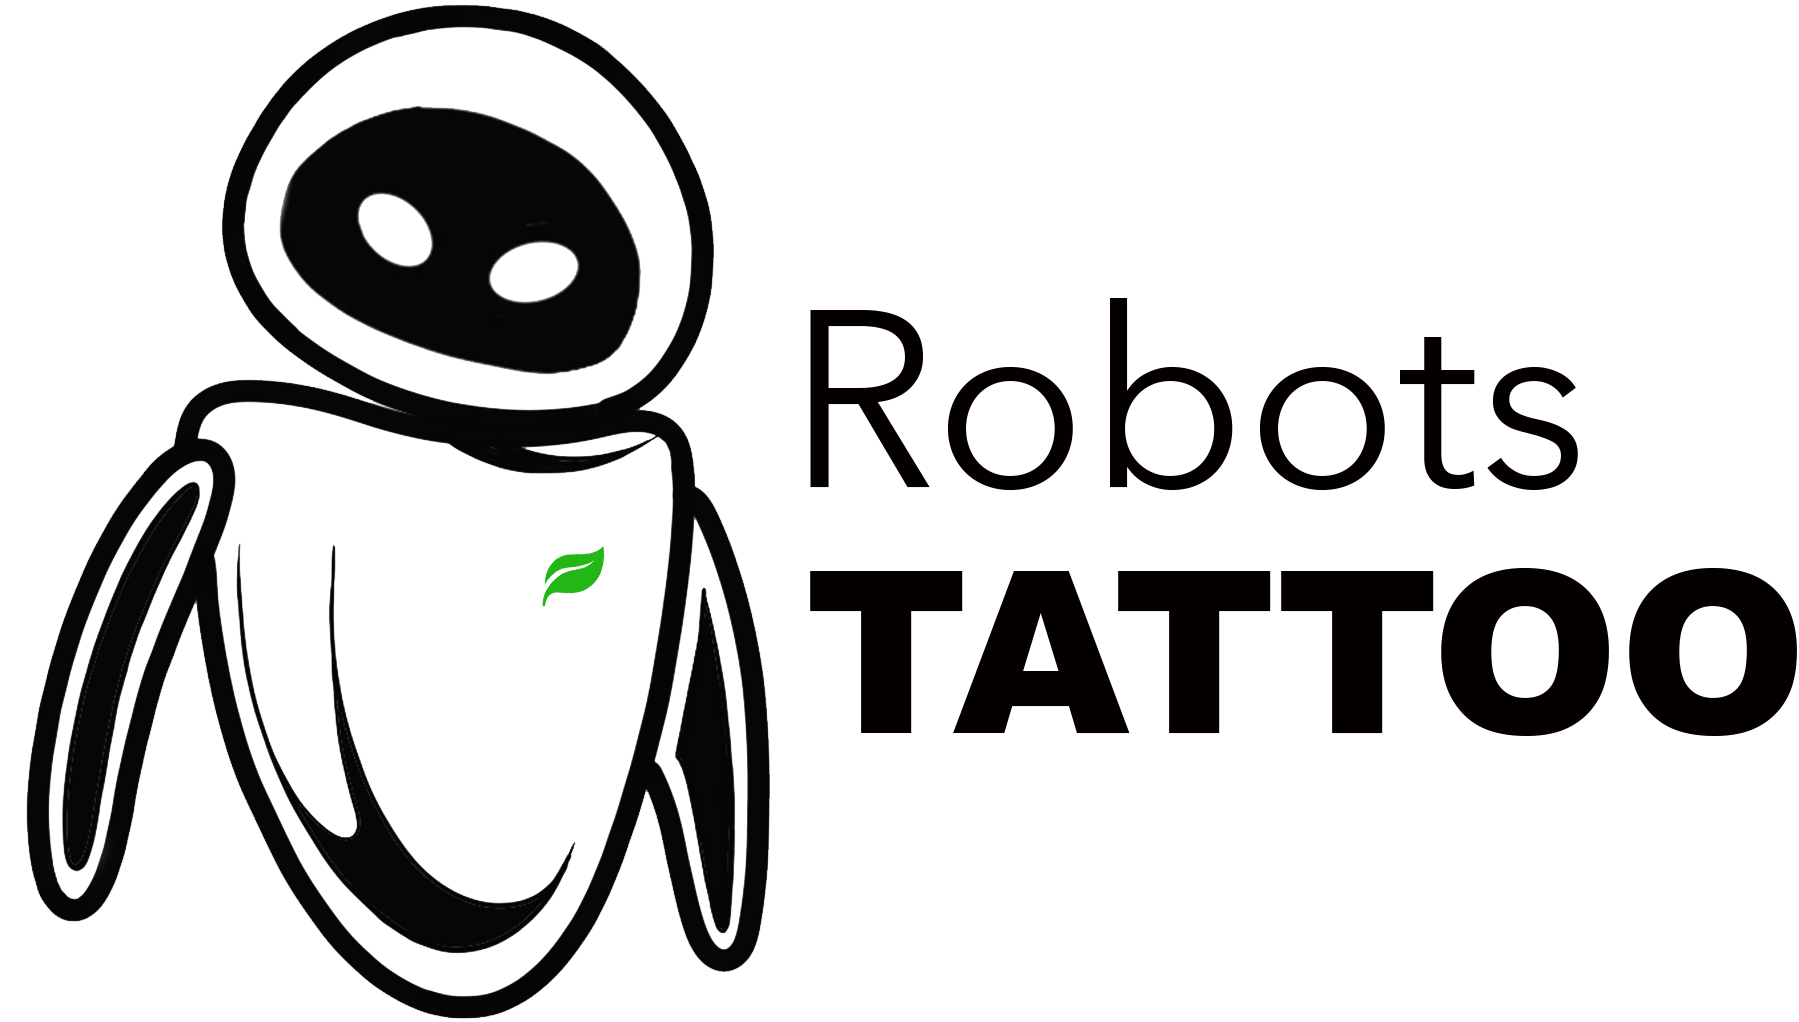 Best tattoo studio in bangalore robots tattoo studio bangalore